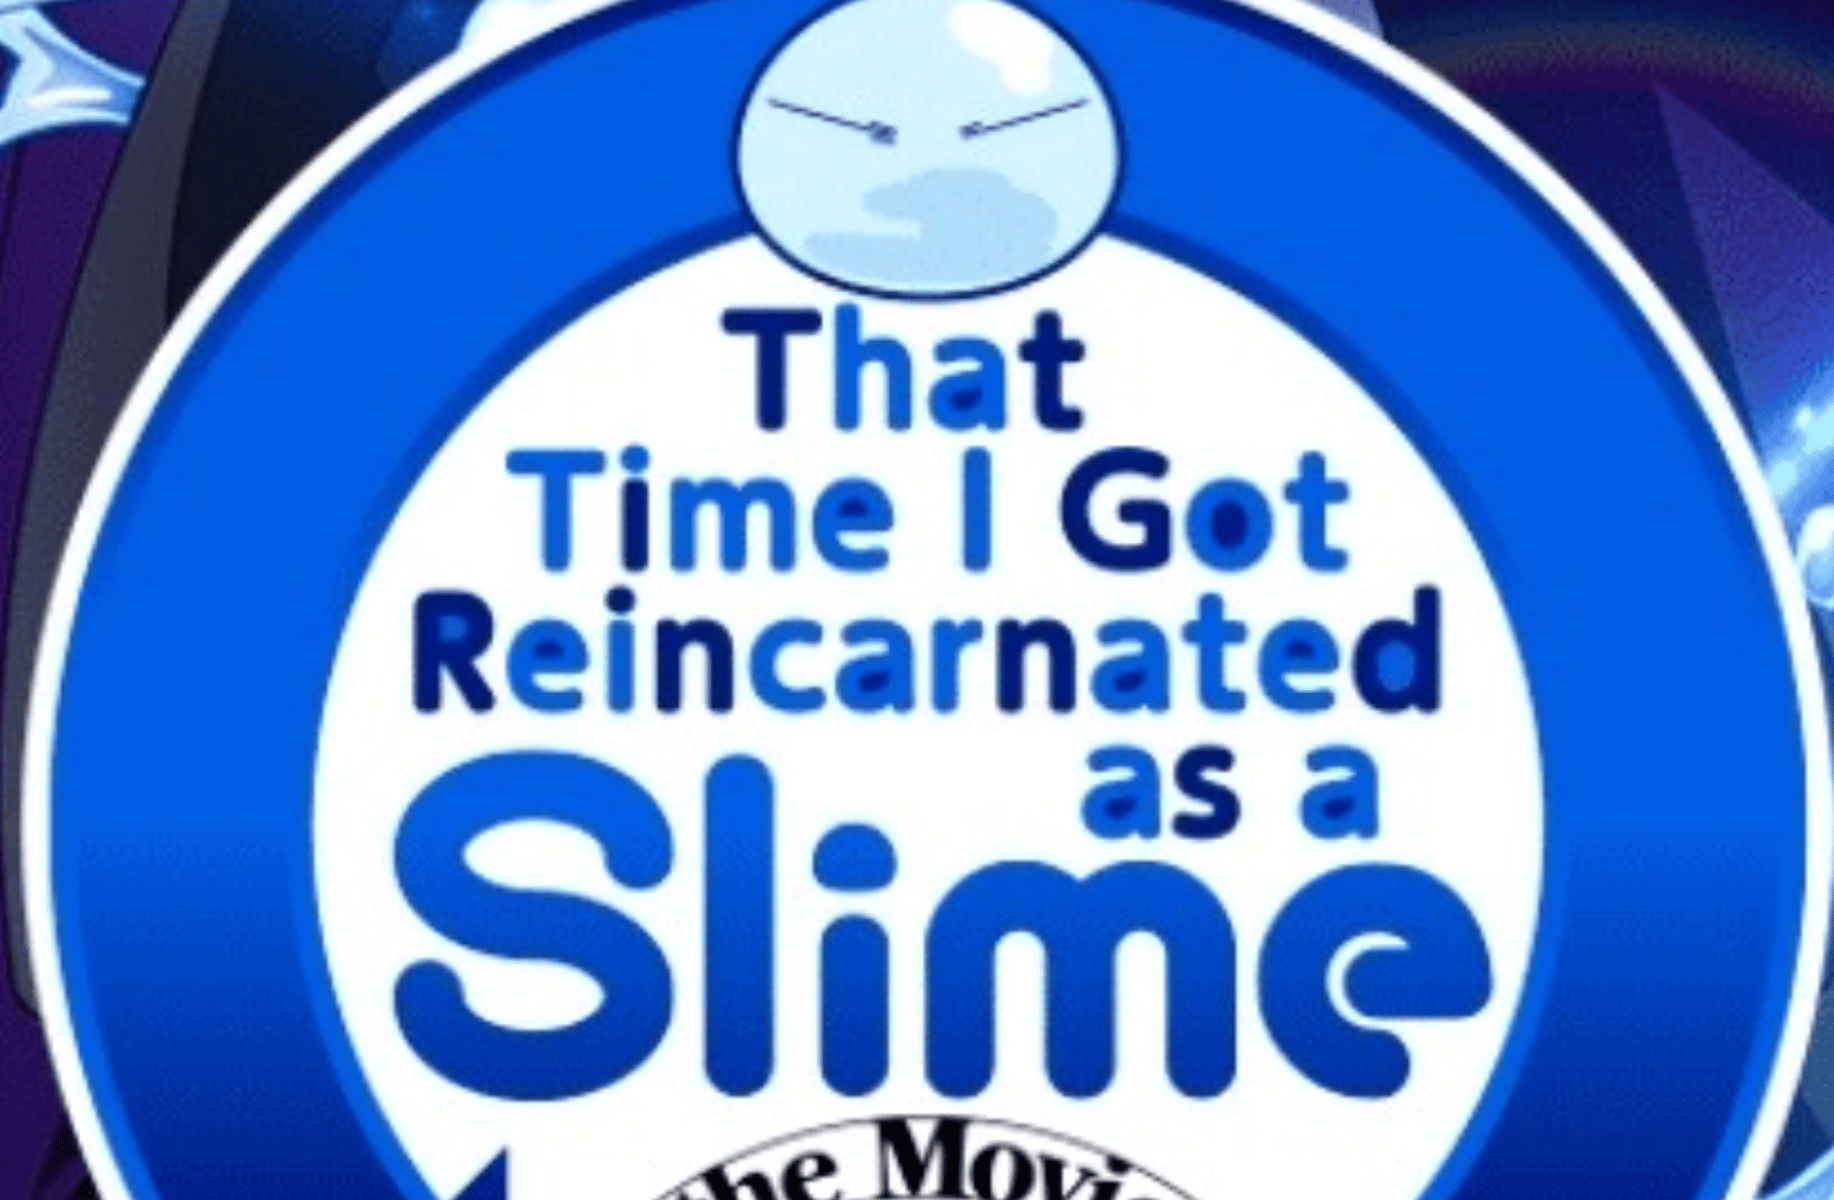 Reincarnated as a slime